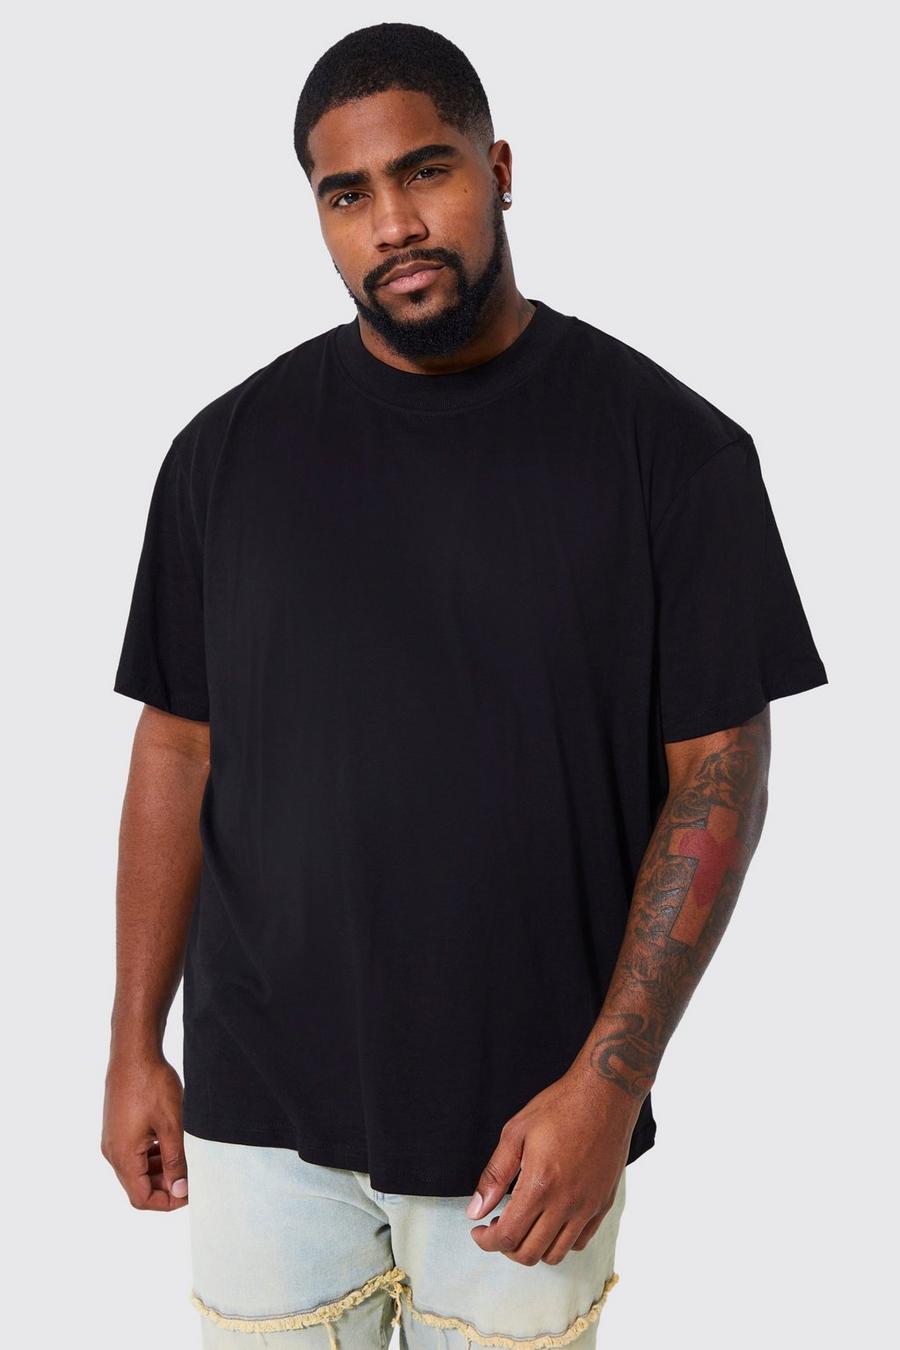 T-shirt comoda Plus Size Basic con girocollo esteso, Black nero